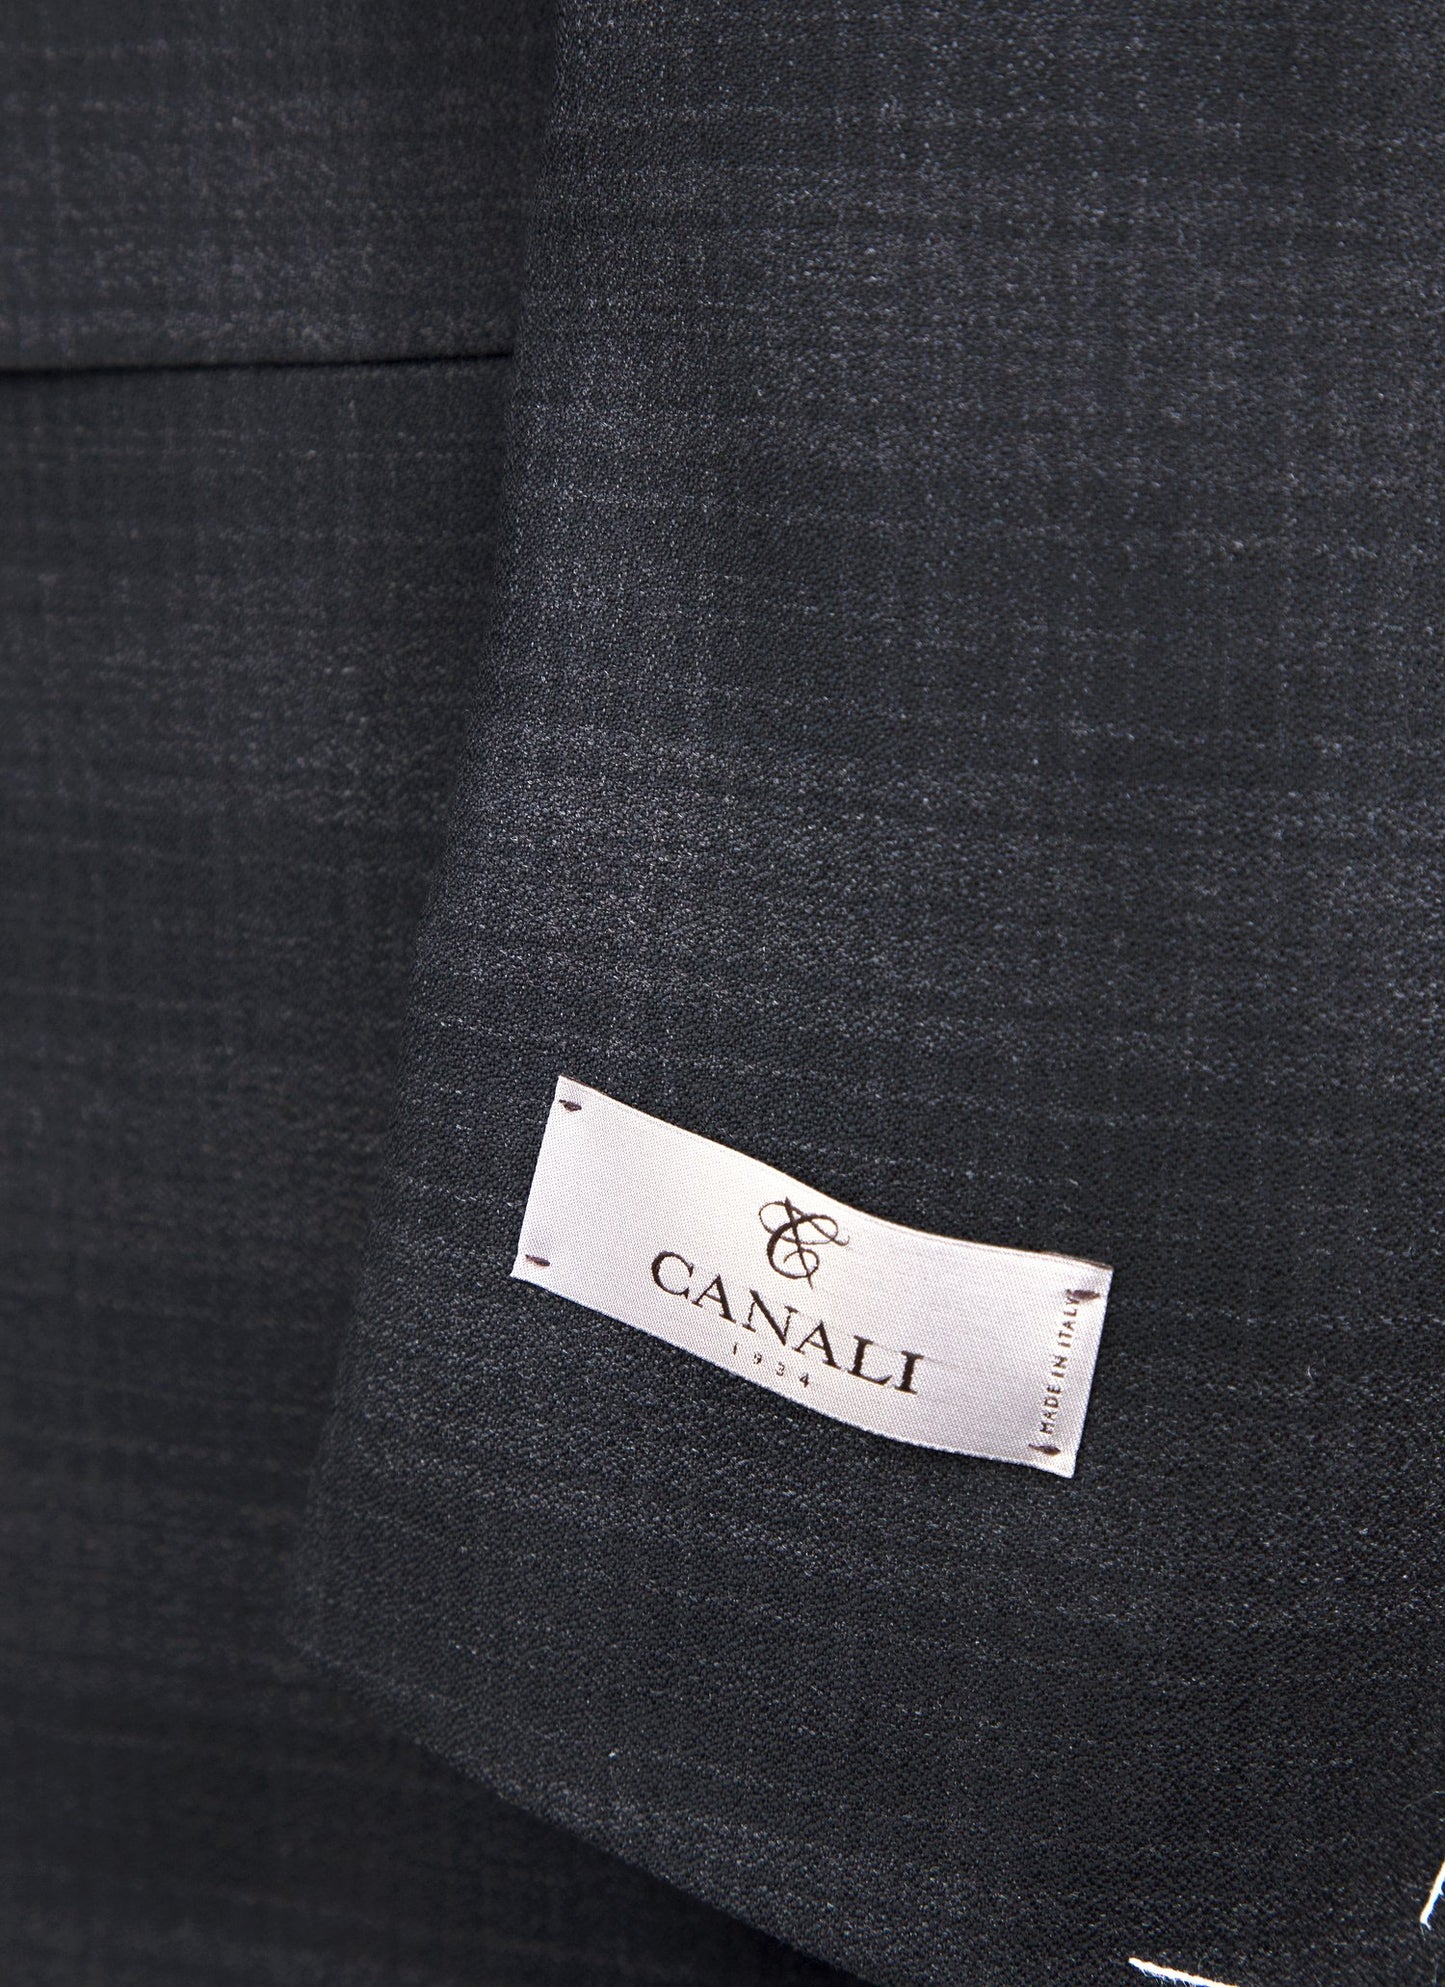 Canali Siena Model Wool Suit in Dark Gray Check